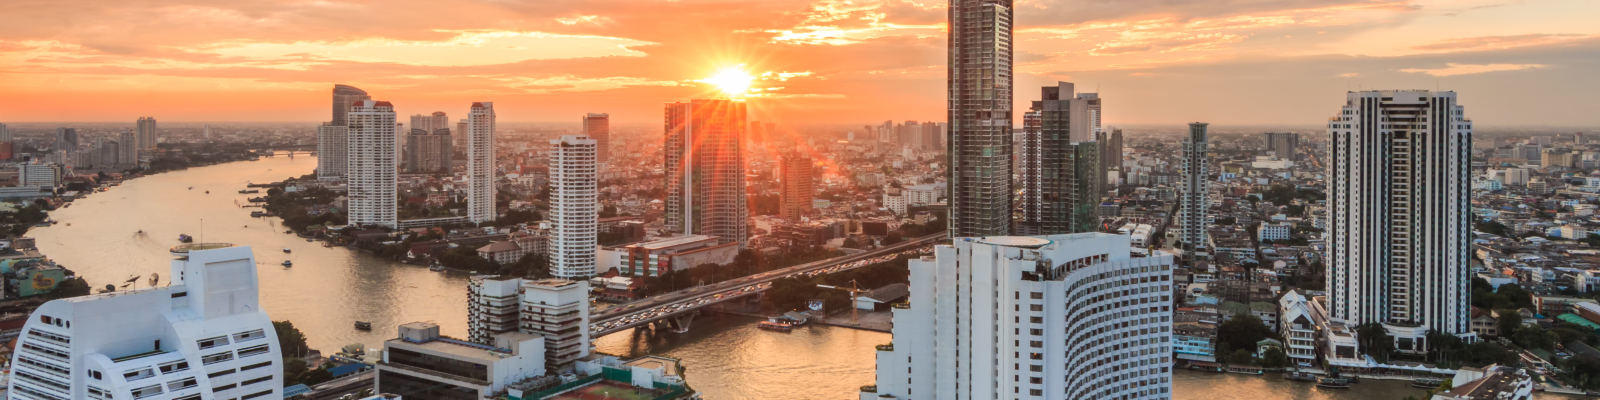 bangkokg skyline sunset